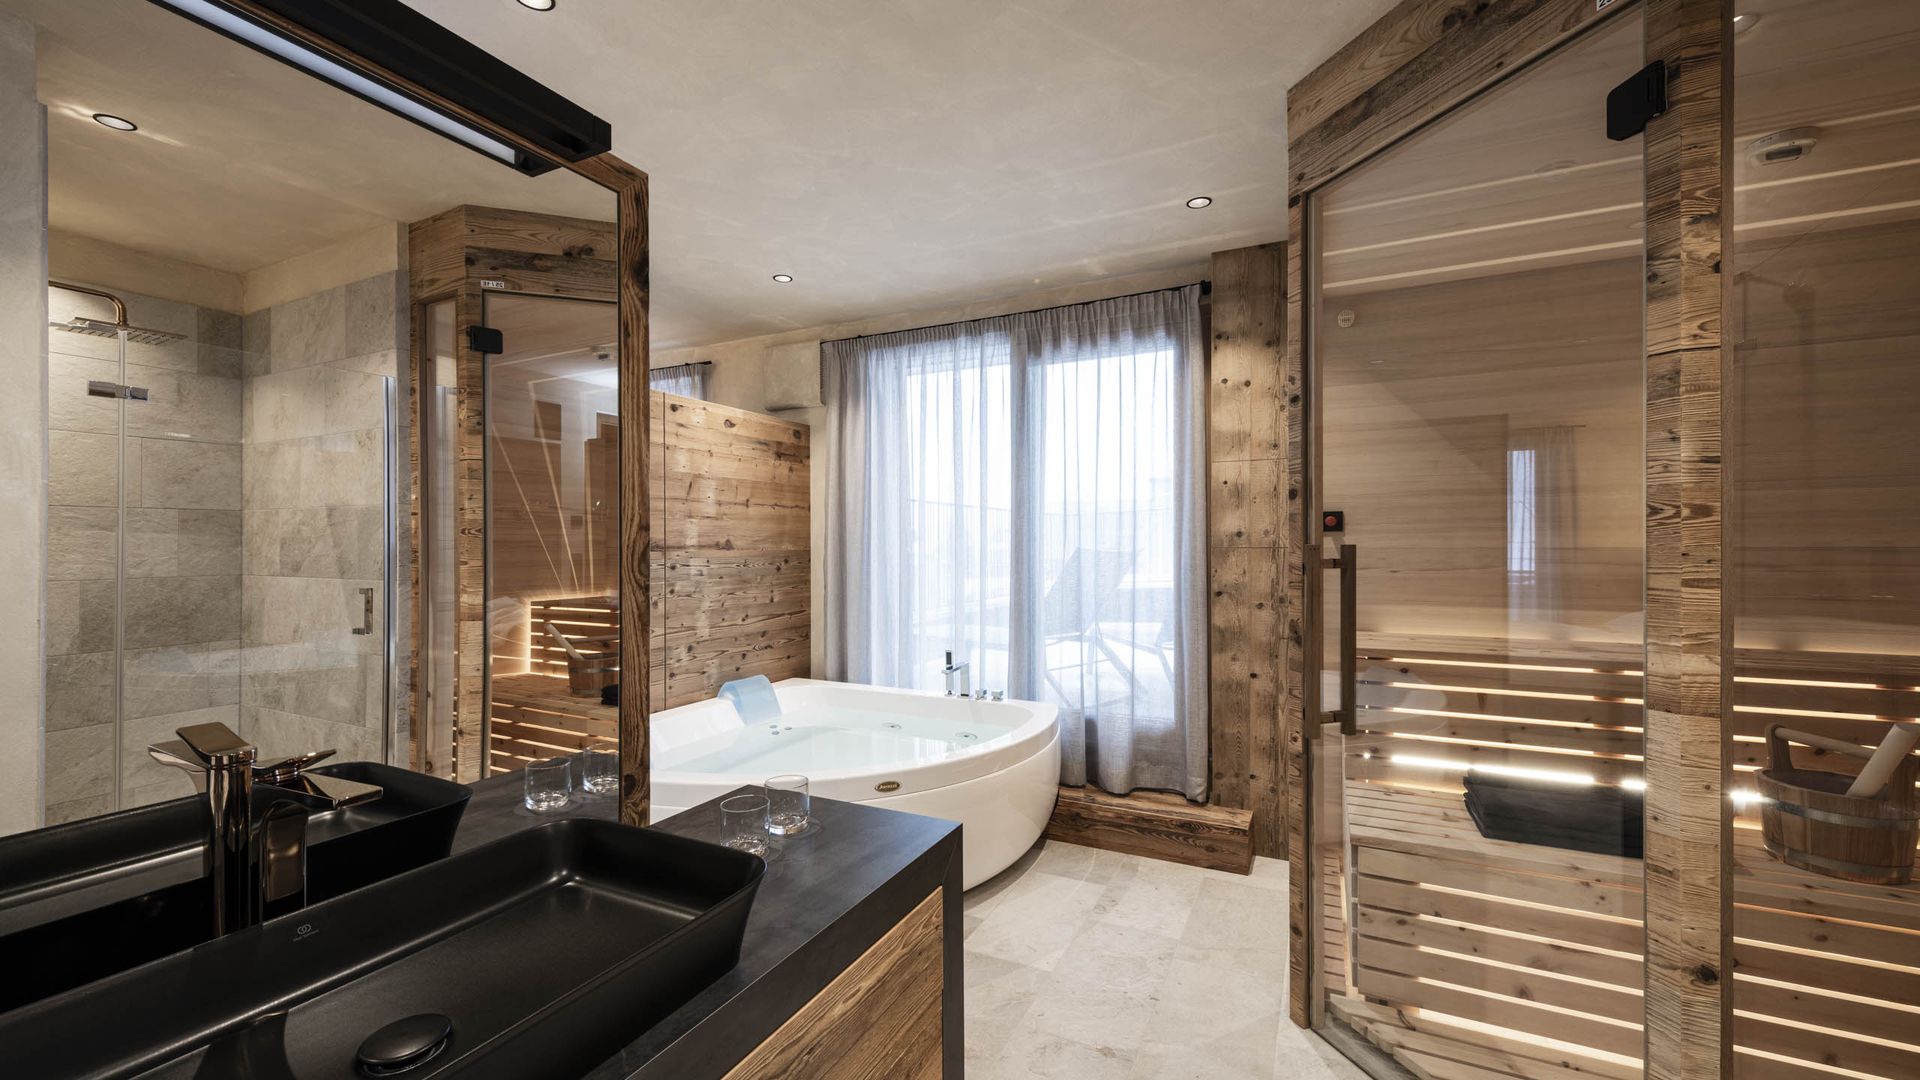 Bathroom with private sauna